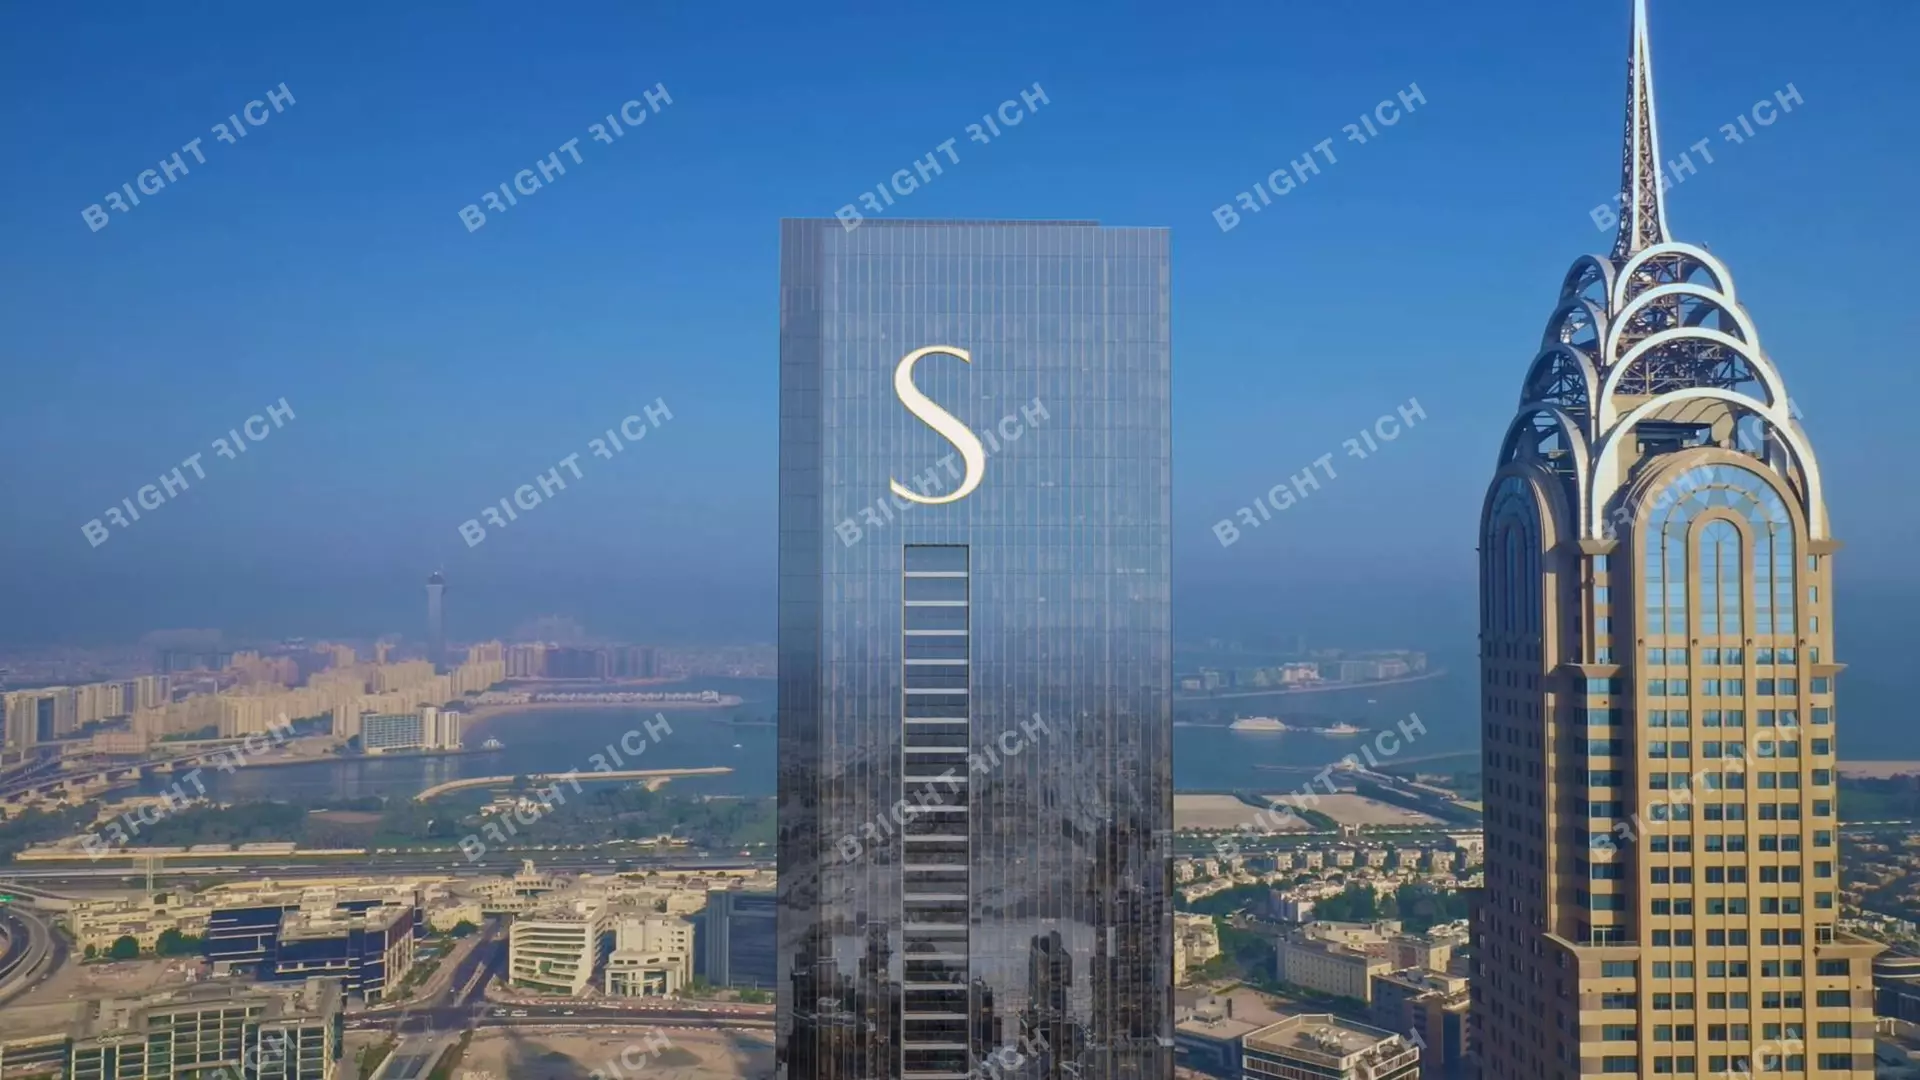 The S, апарт-комплекс в Дубае - 2